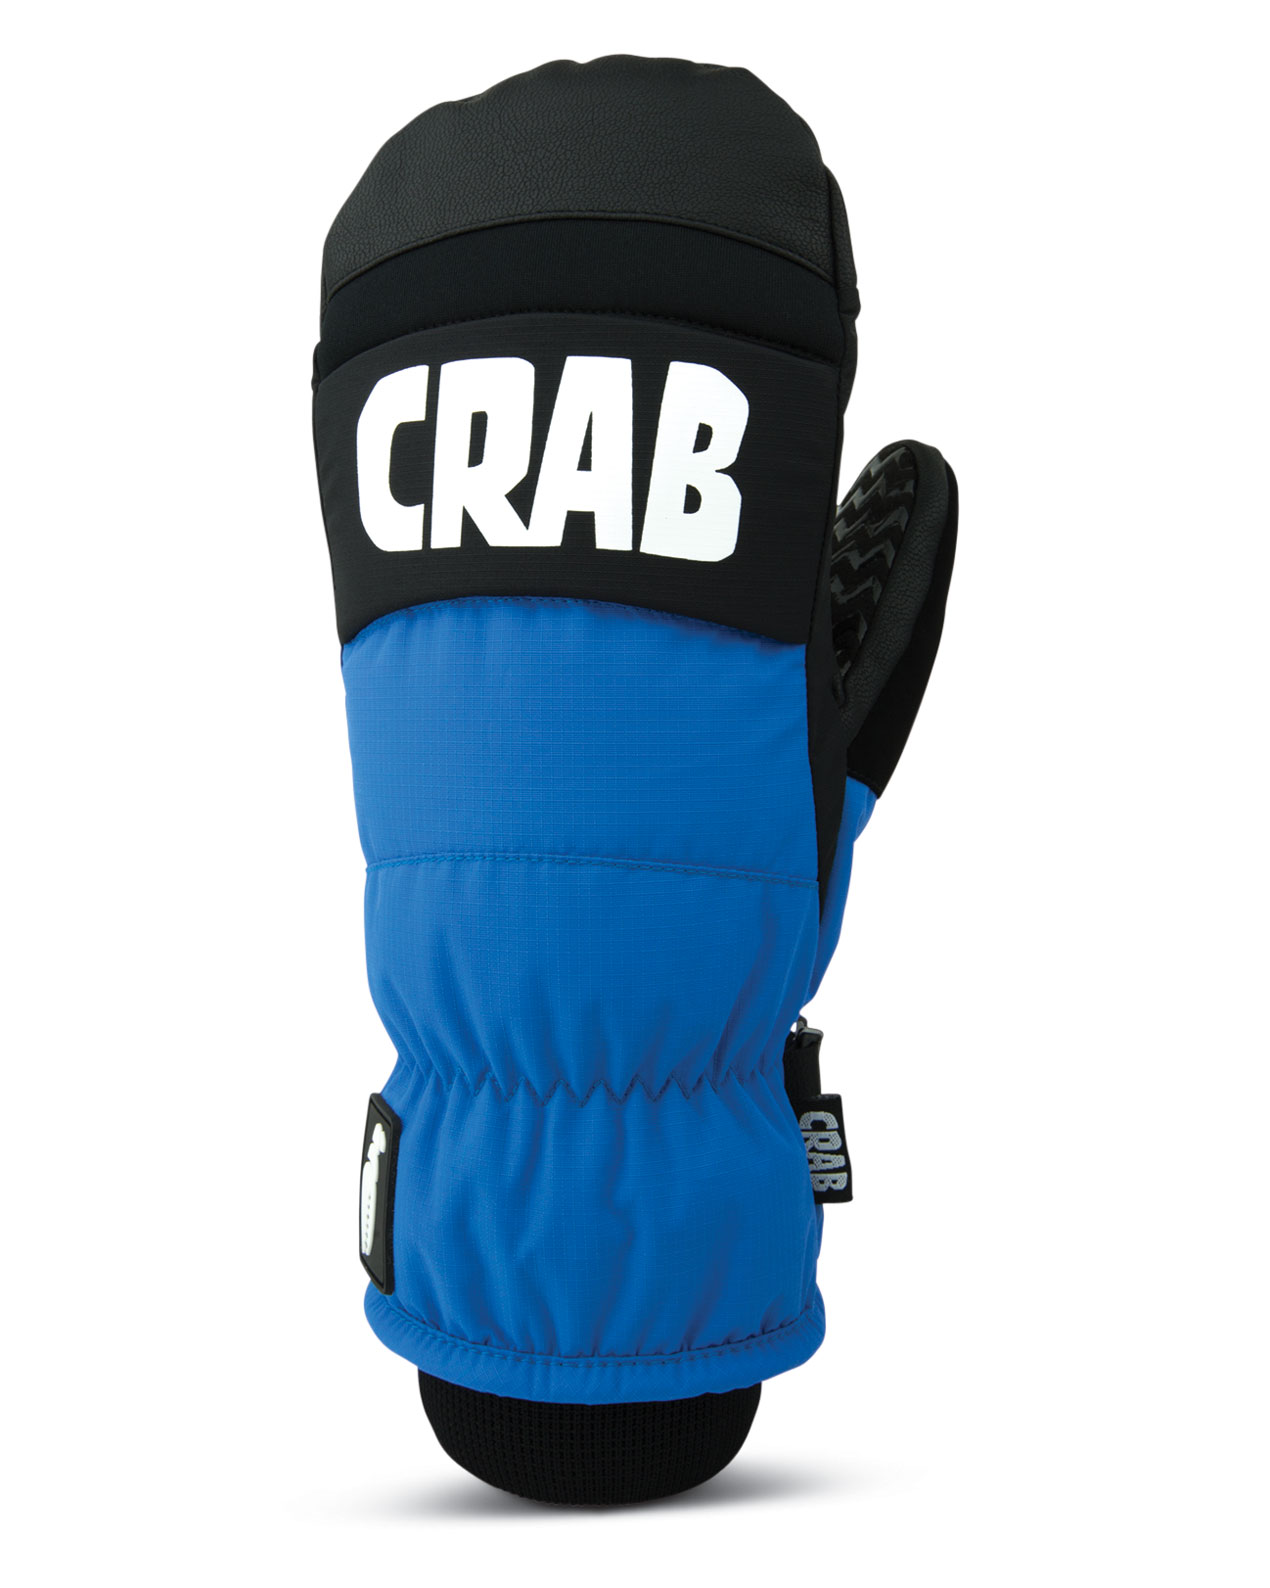 Crab Grab Punch Mitt 2019  unfamiliar snowboard shop